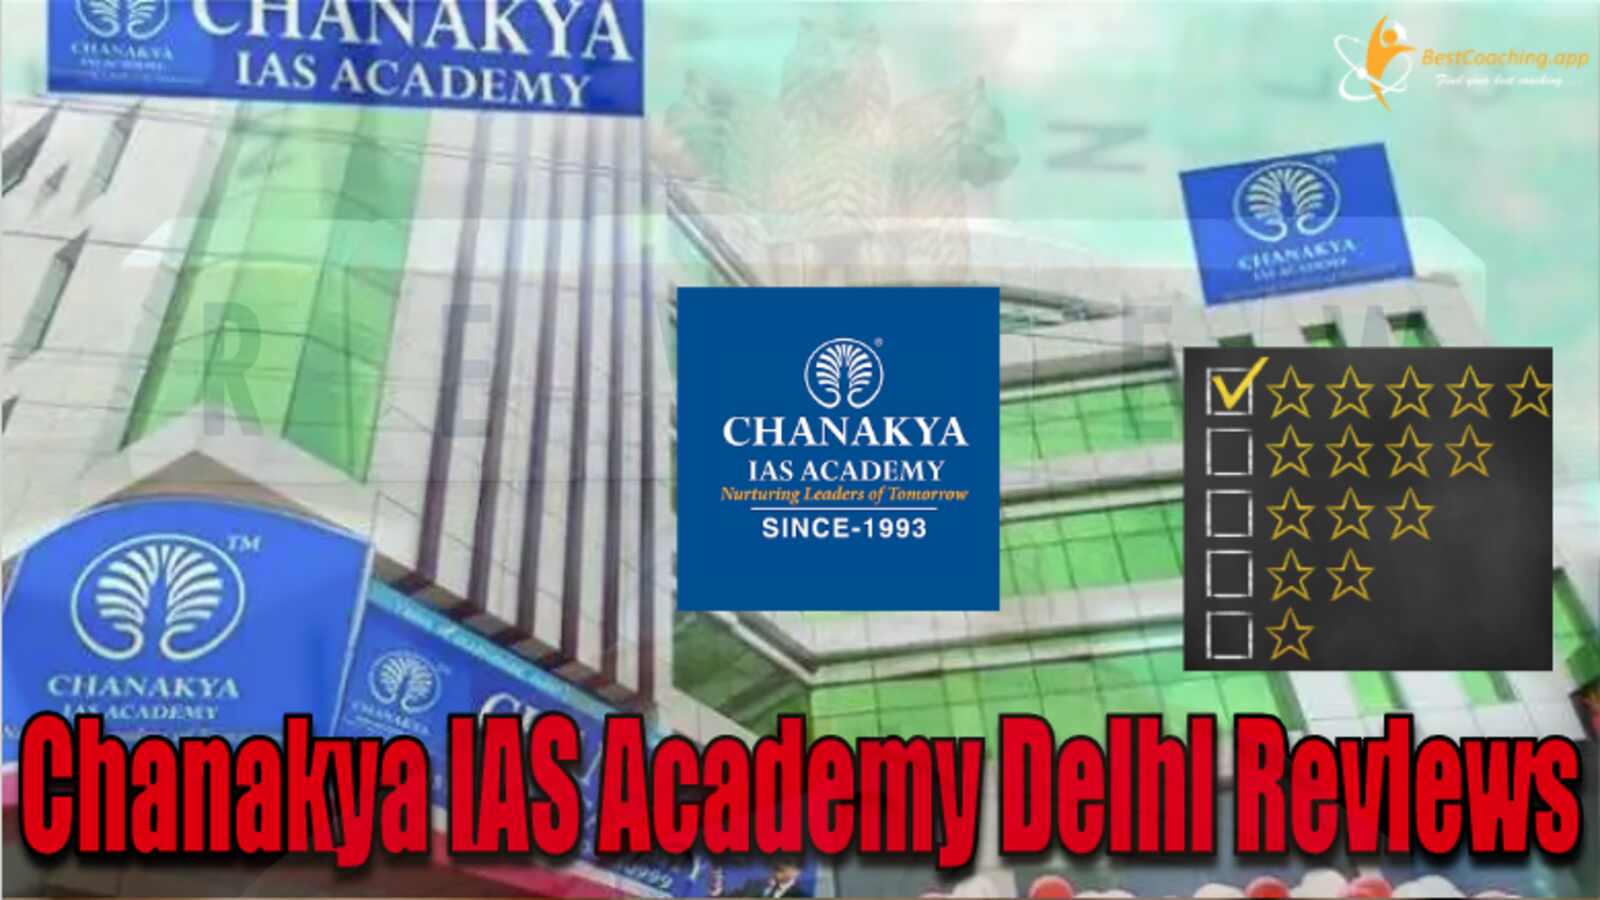 Chanakya IAS Academy Delhi Reviews